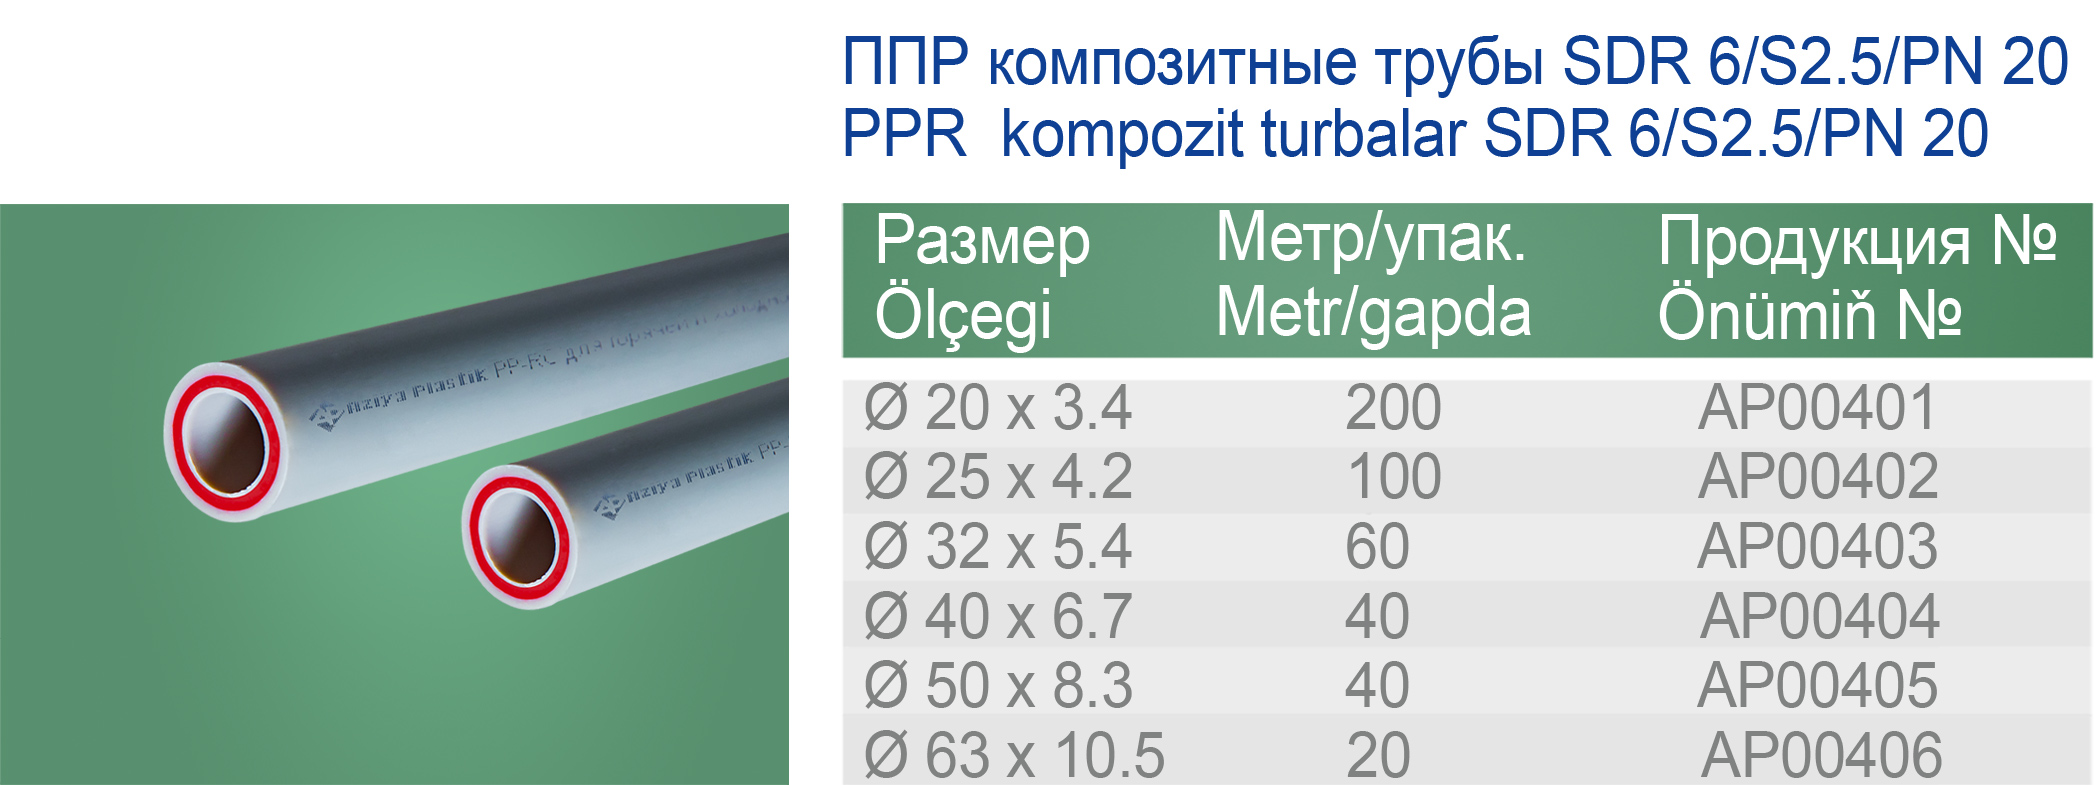 Полипропиленовая композитная труба АП PP-R pipe Ø63x10.5 SDR6/S2.5/PN20 .